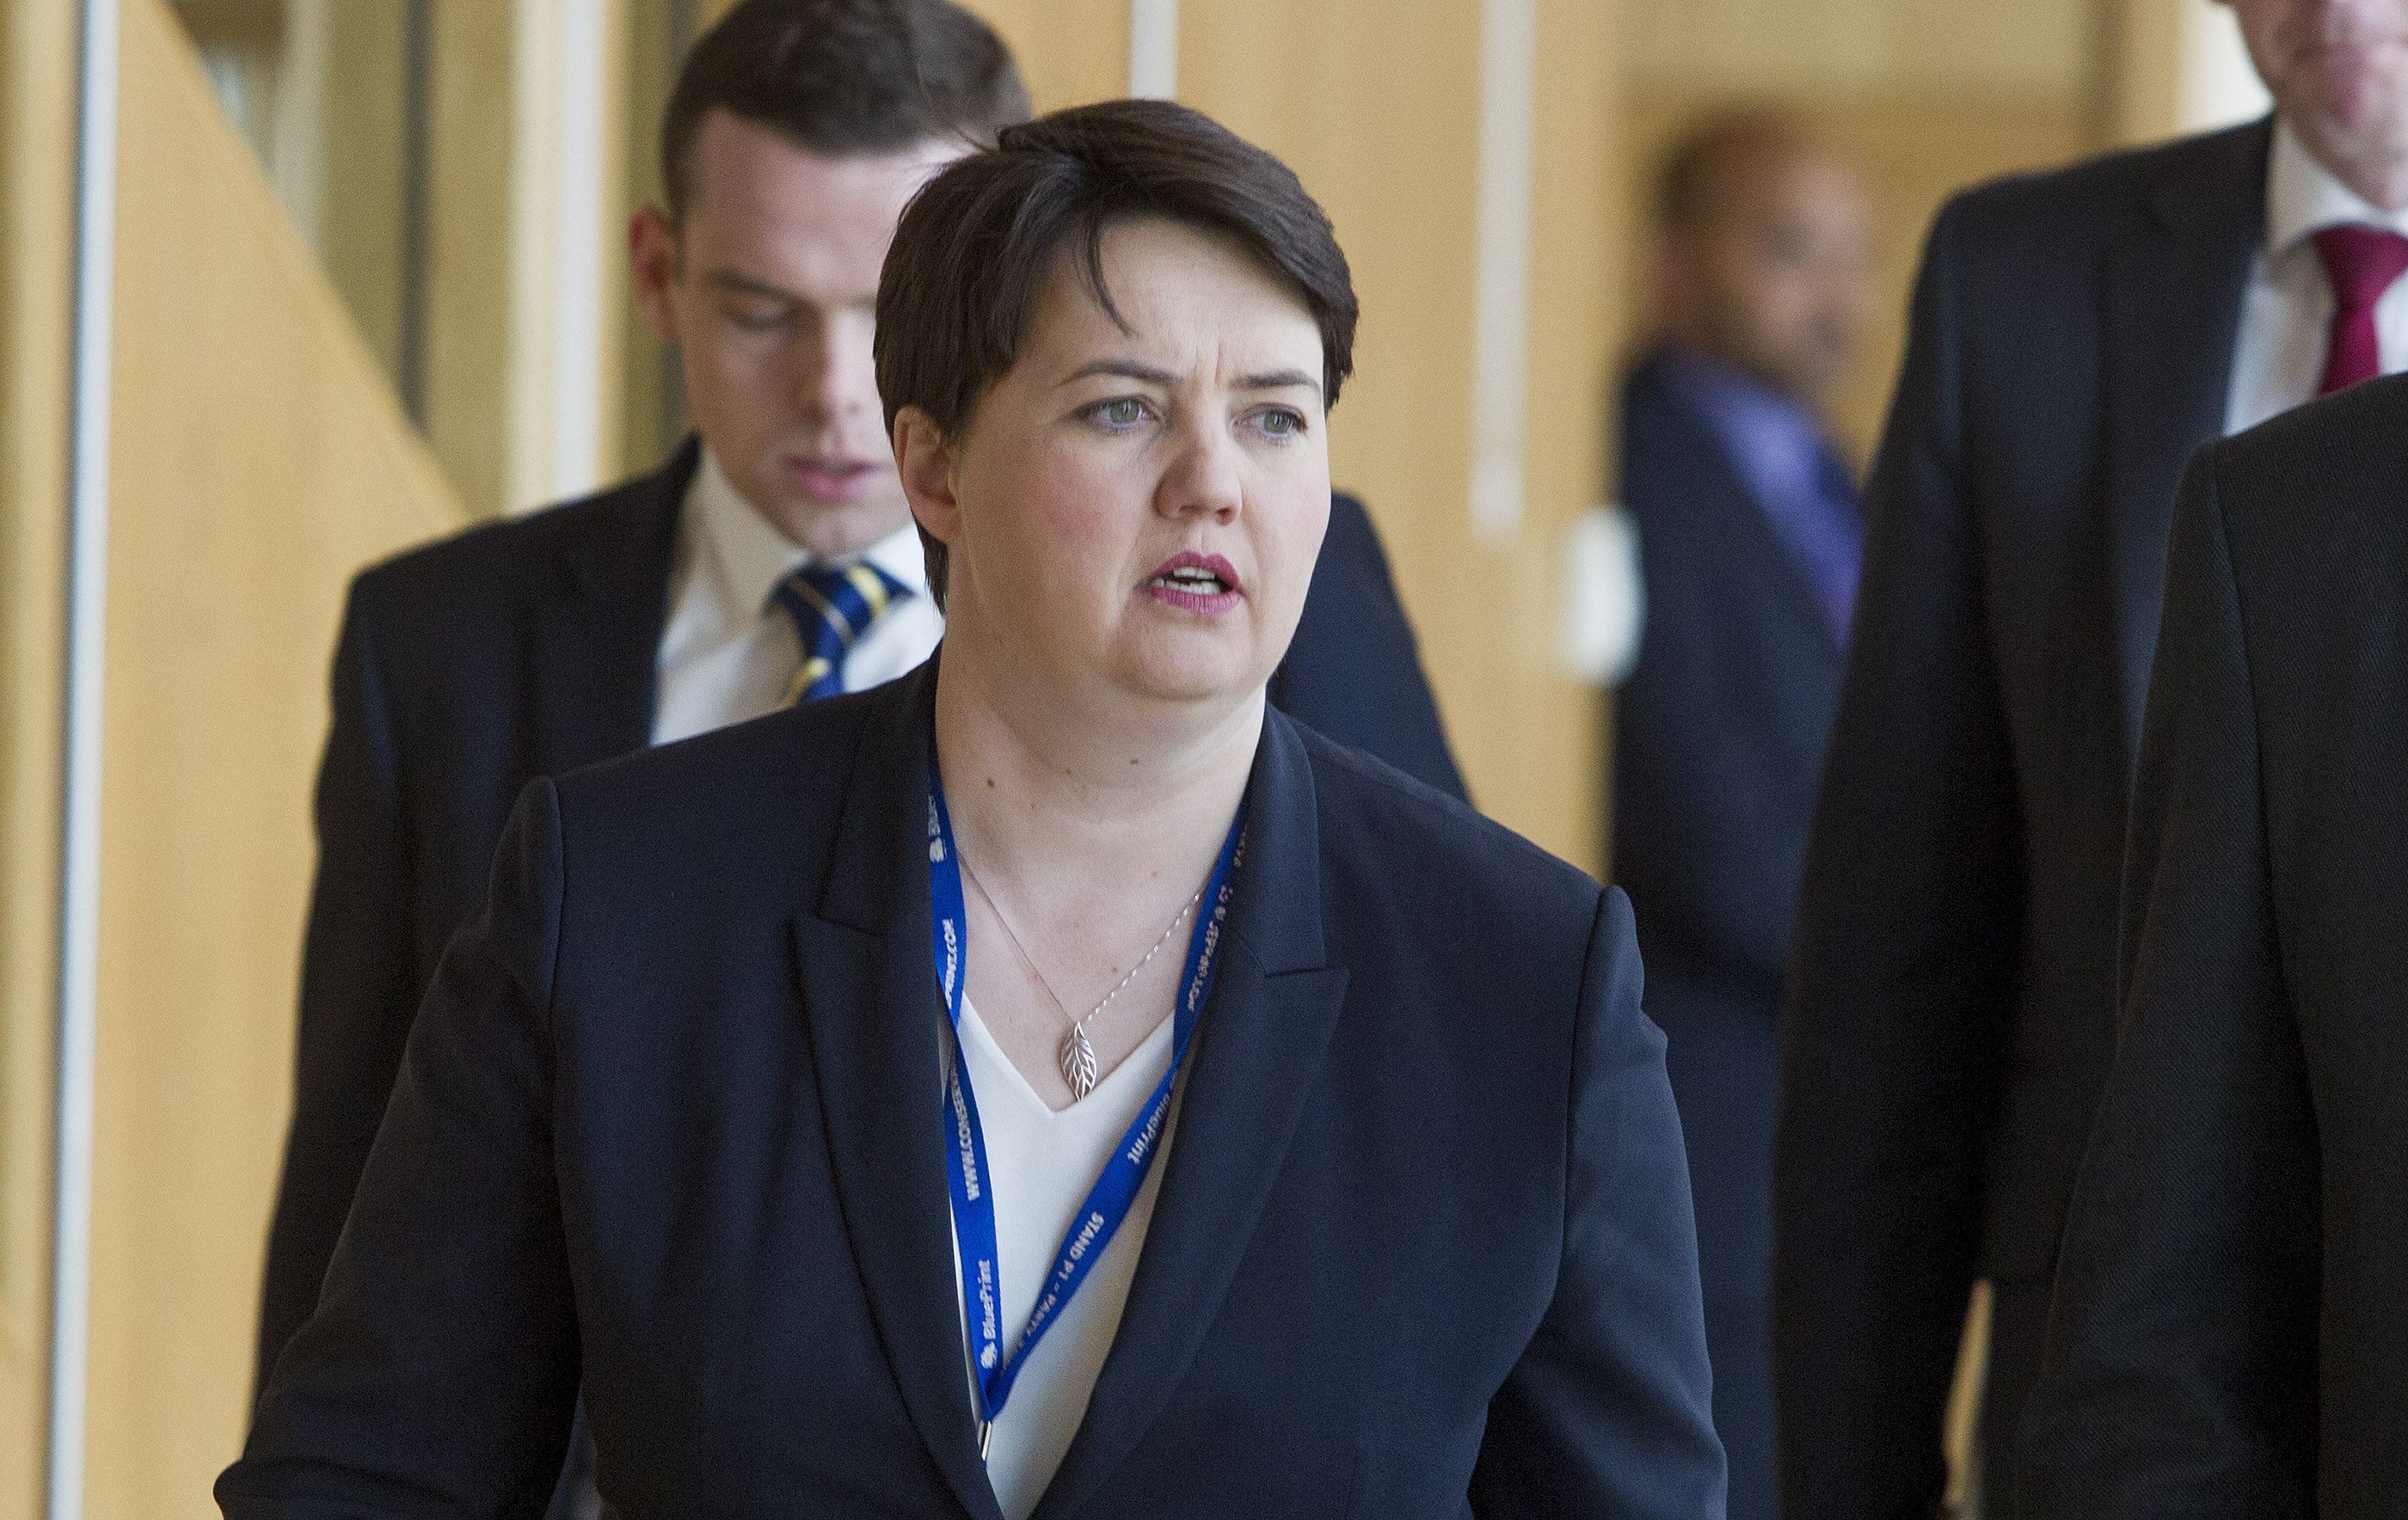 Scottish Conservative leader Ruth Davidson (SWNS)